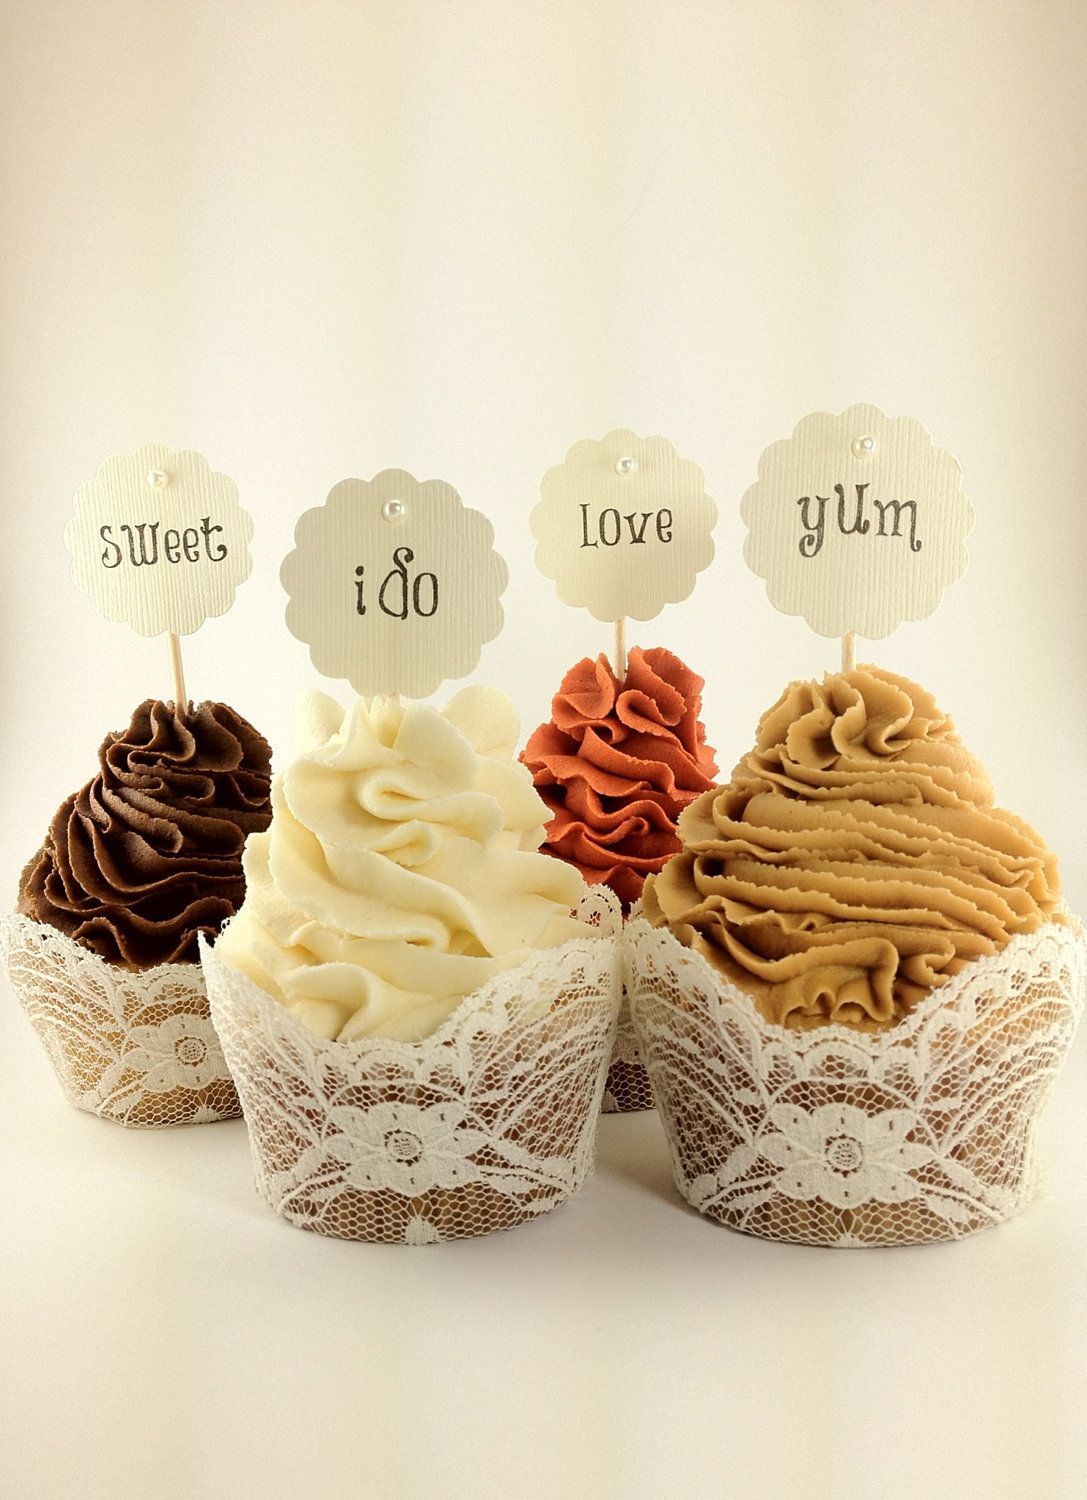 Sweet & Simple Pearl Cupcake toppers  – Sweet, Yum, I do, Love – Wedding, Bridal